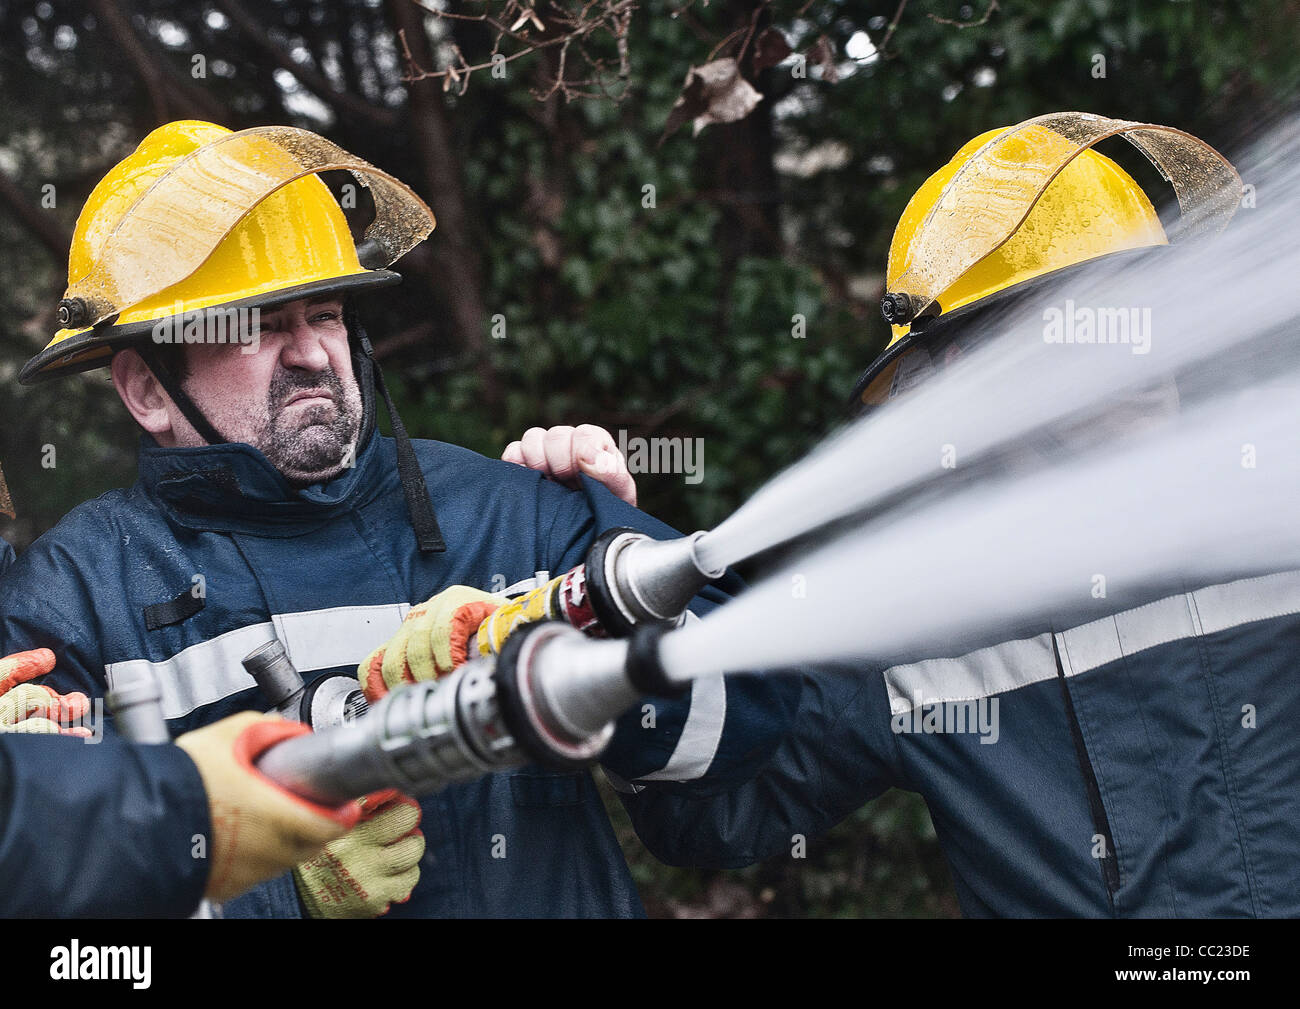 Fireman holding the hose Stock Photo - Alamy